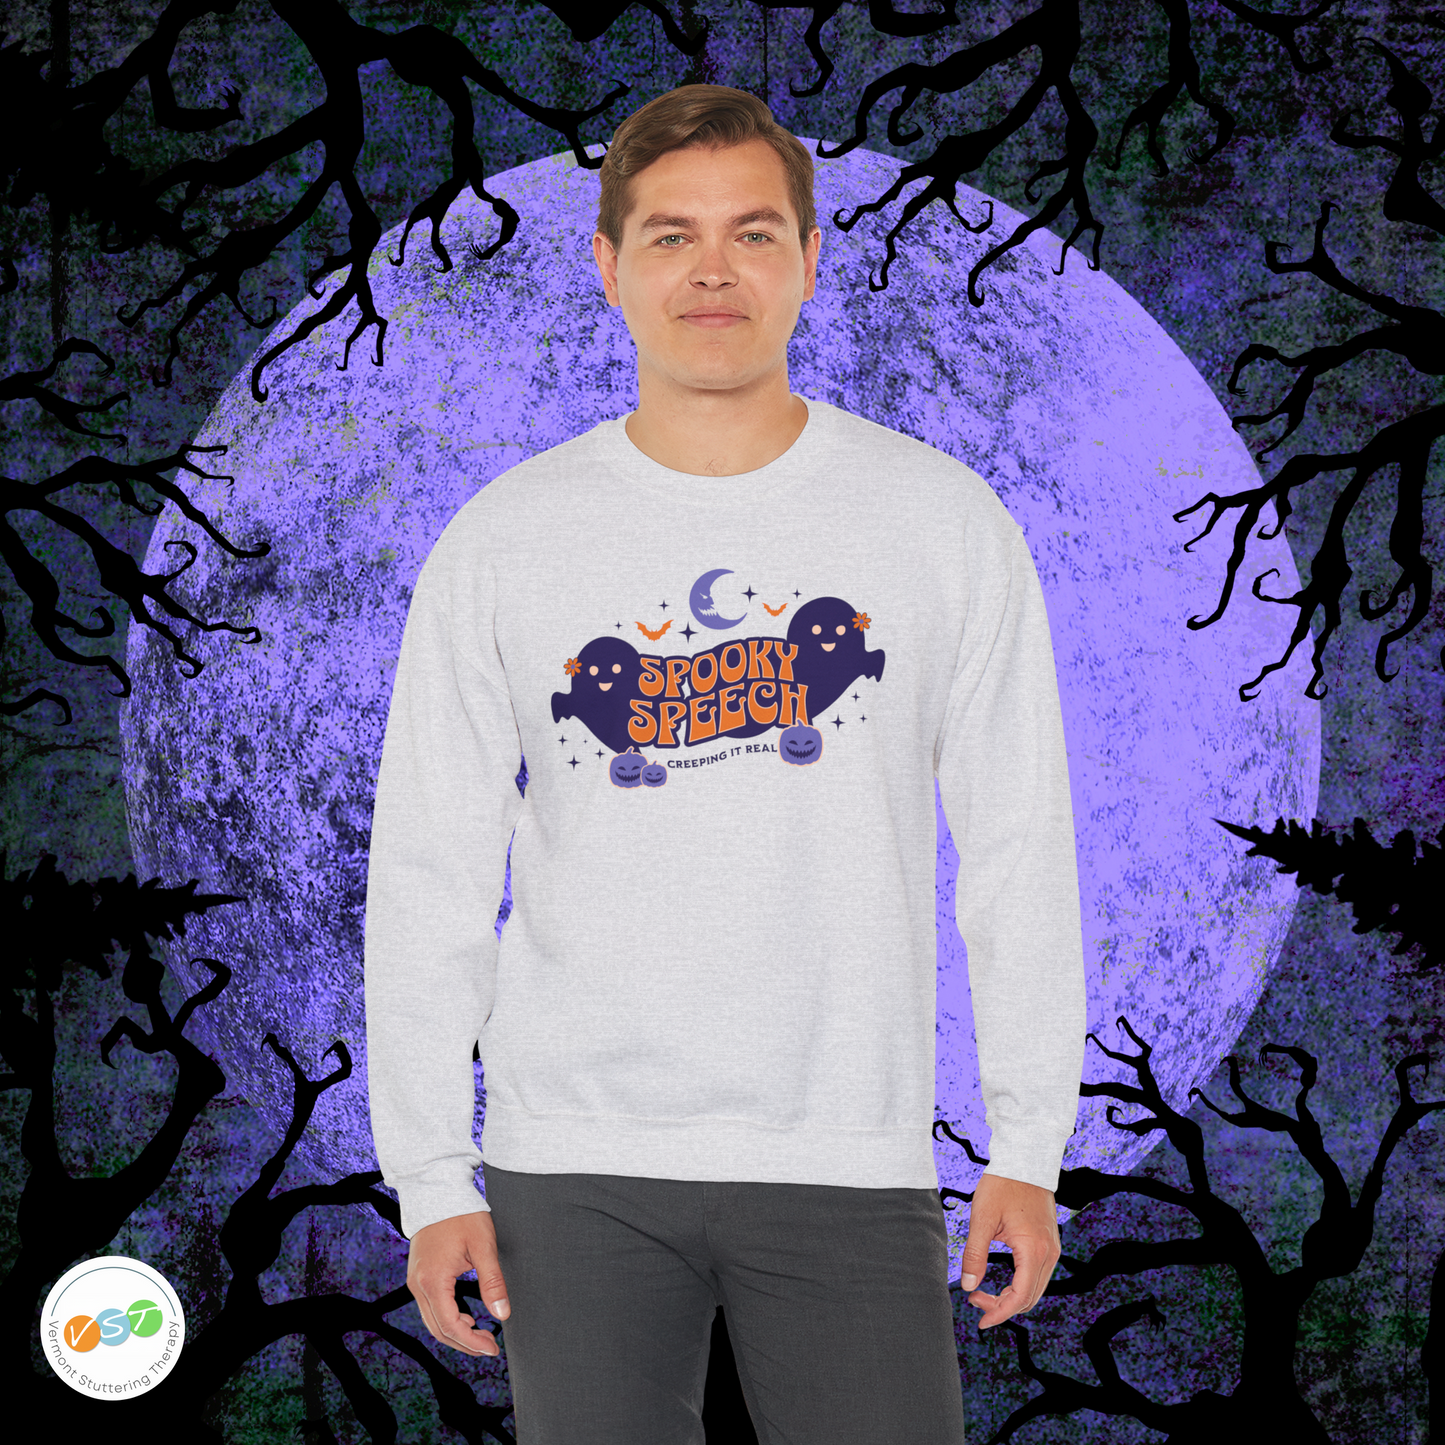 SLP Spooky Speech Creeping It Real Halloween Sweatshirt